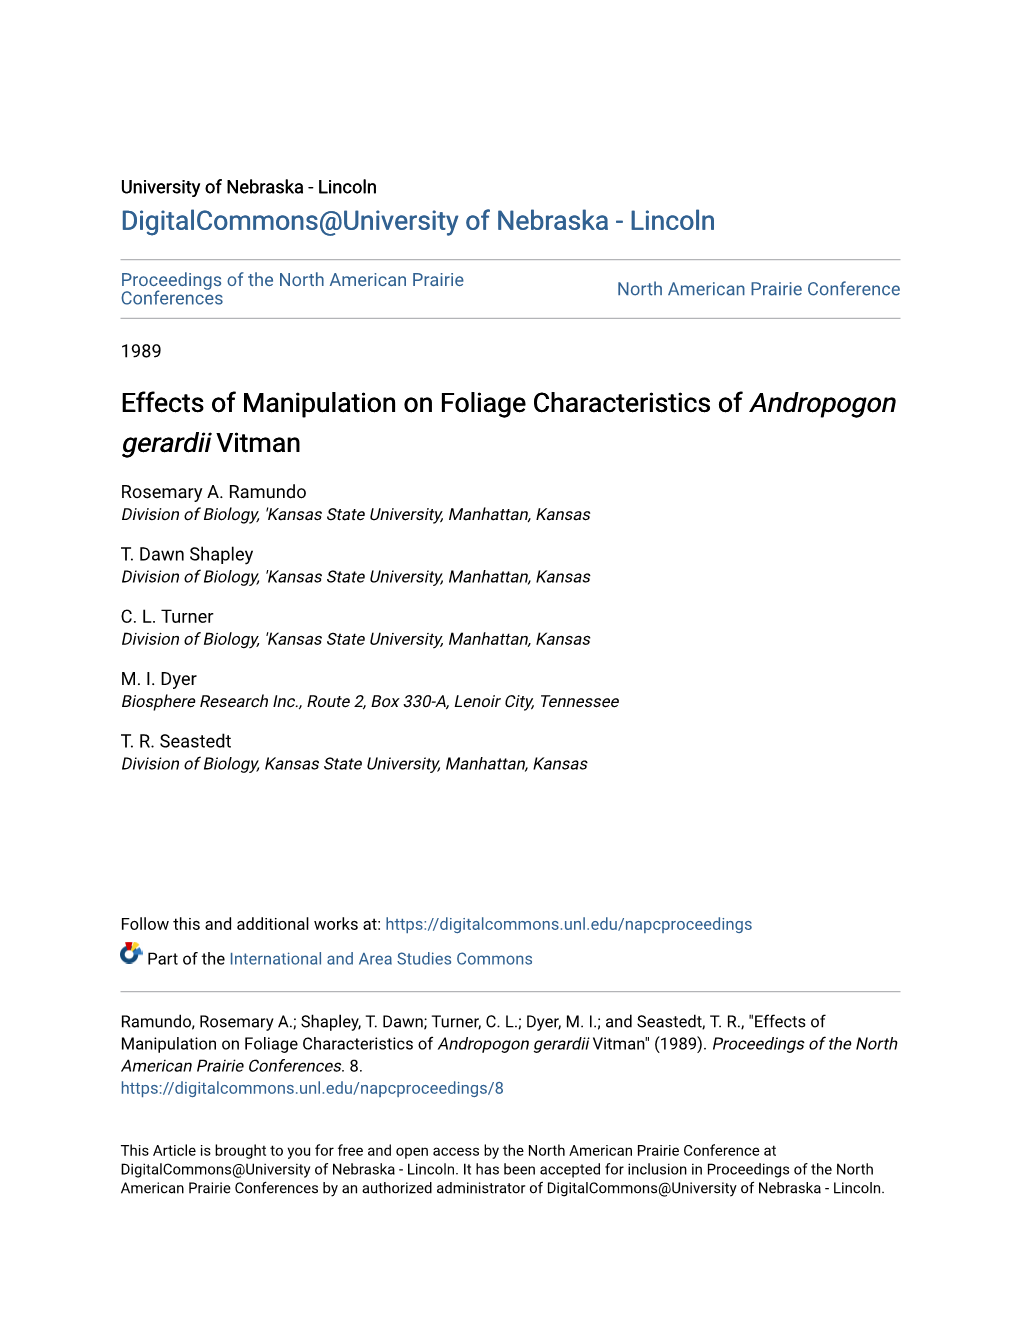 Effects of Manipulation on Foliage Characteristics of Andropogon Gerardii Vitman